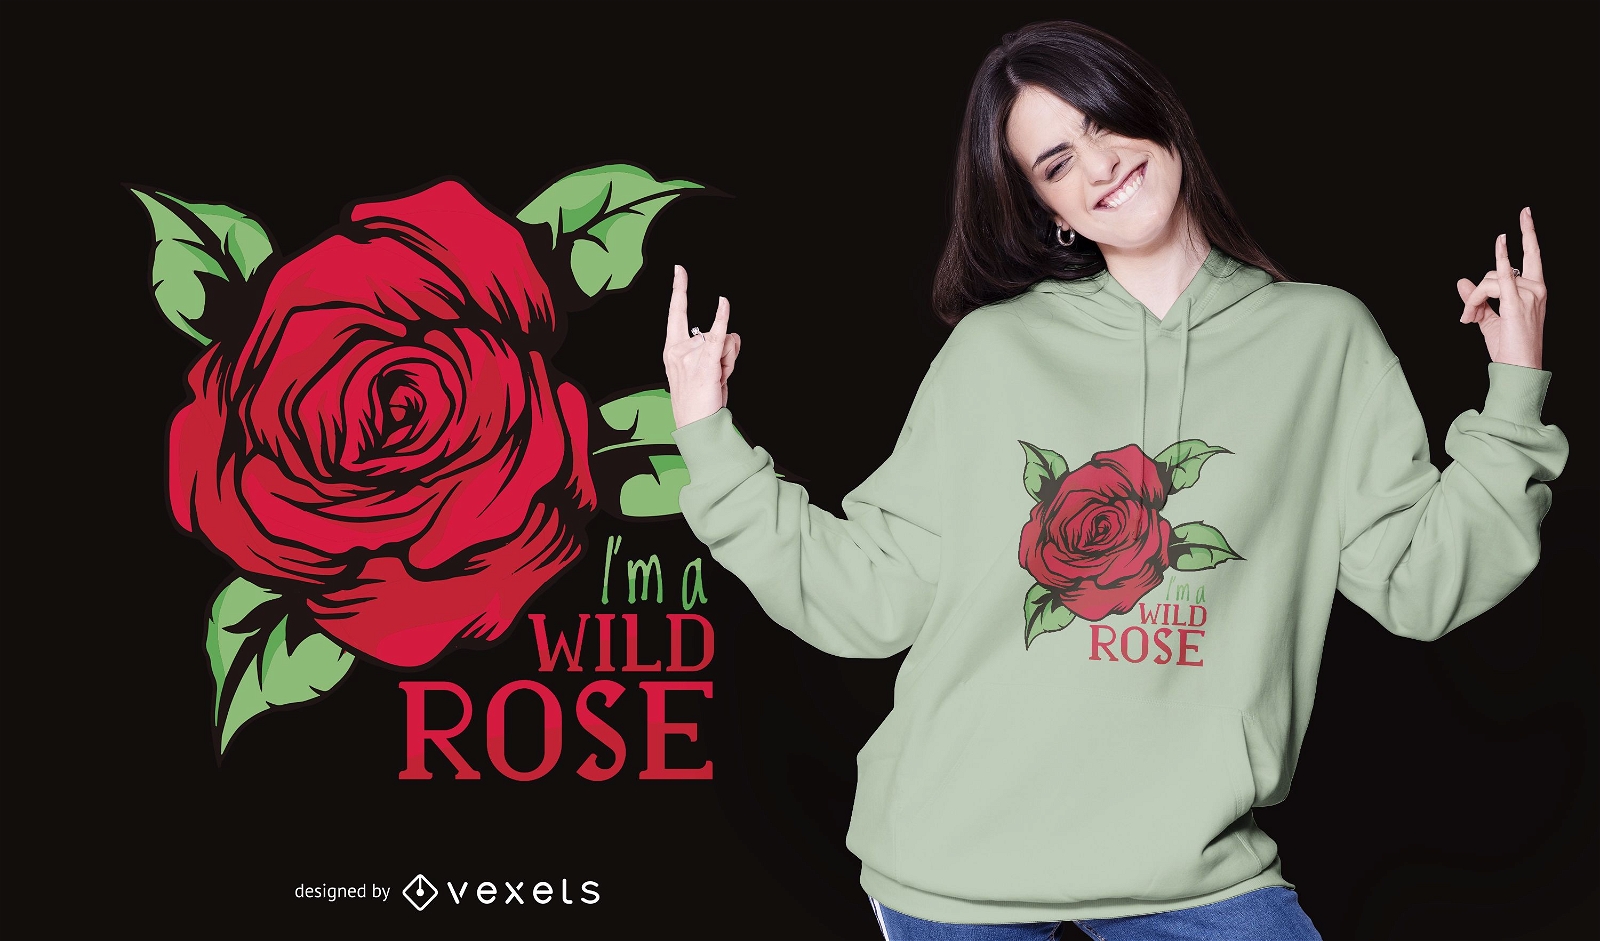 Wild rose t-shirt design